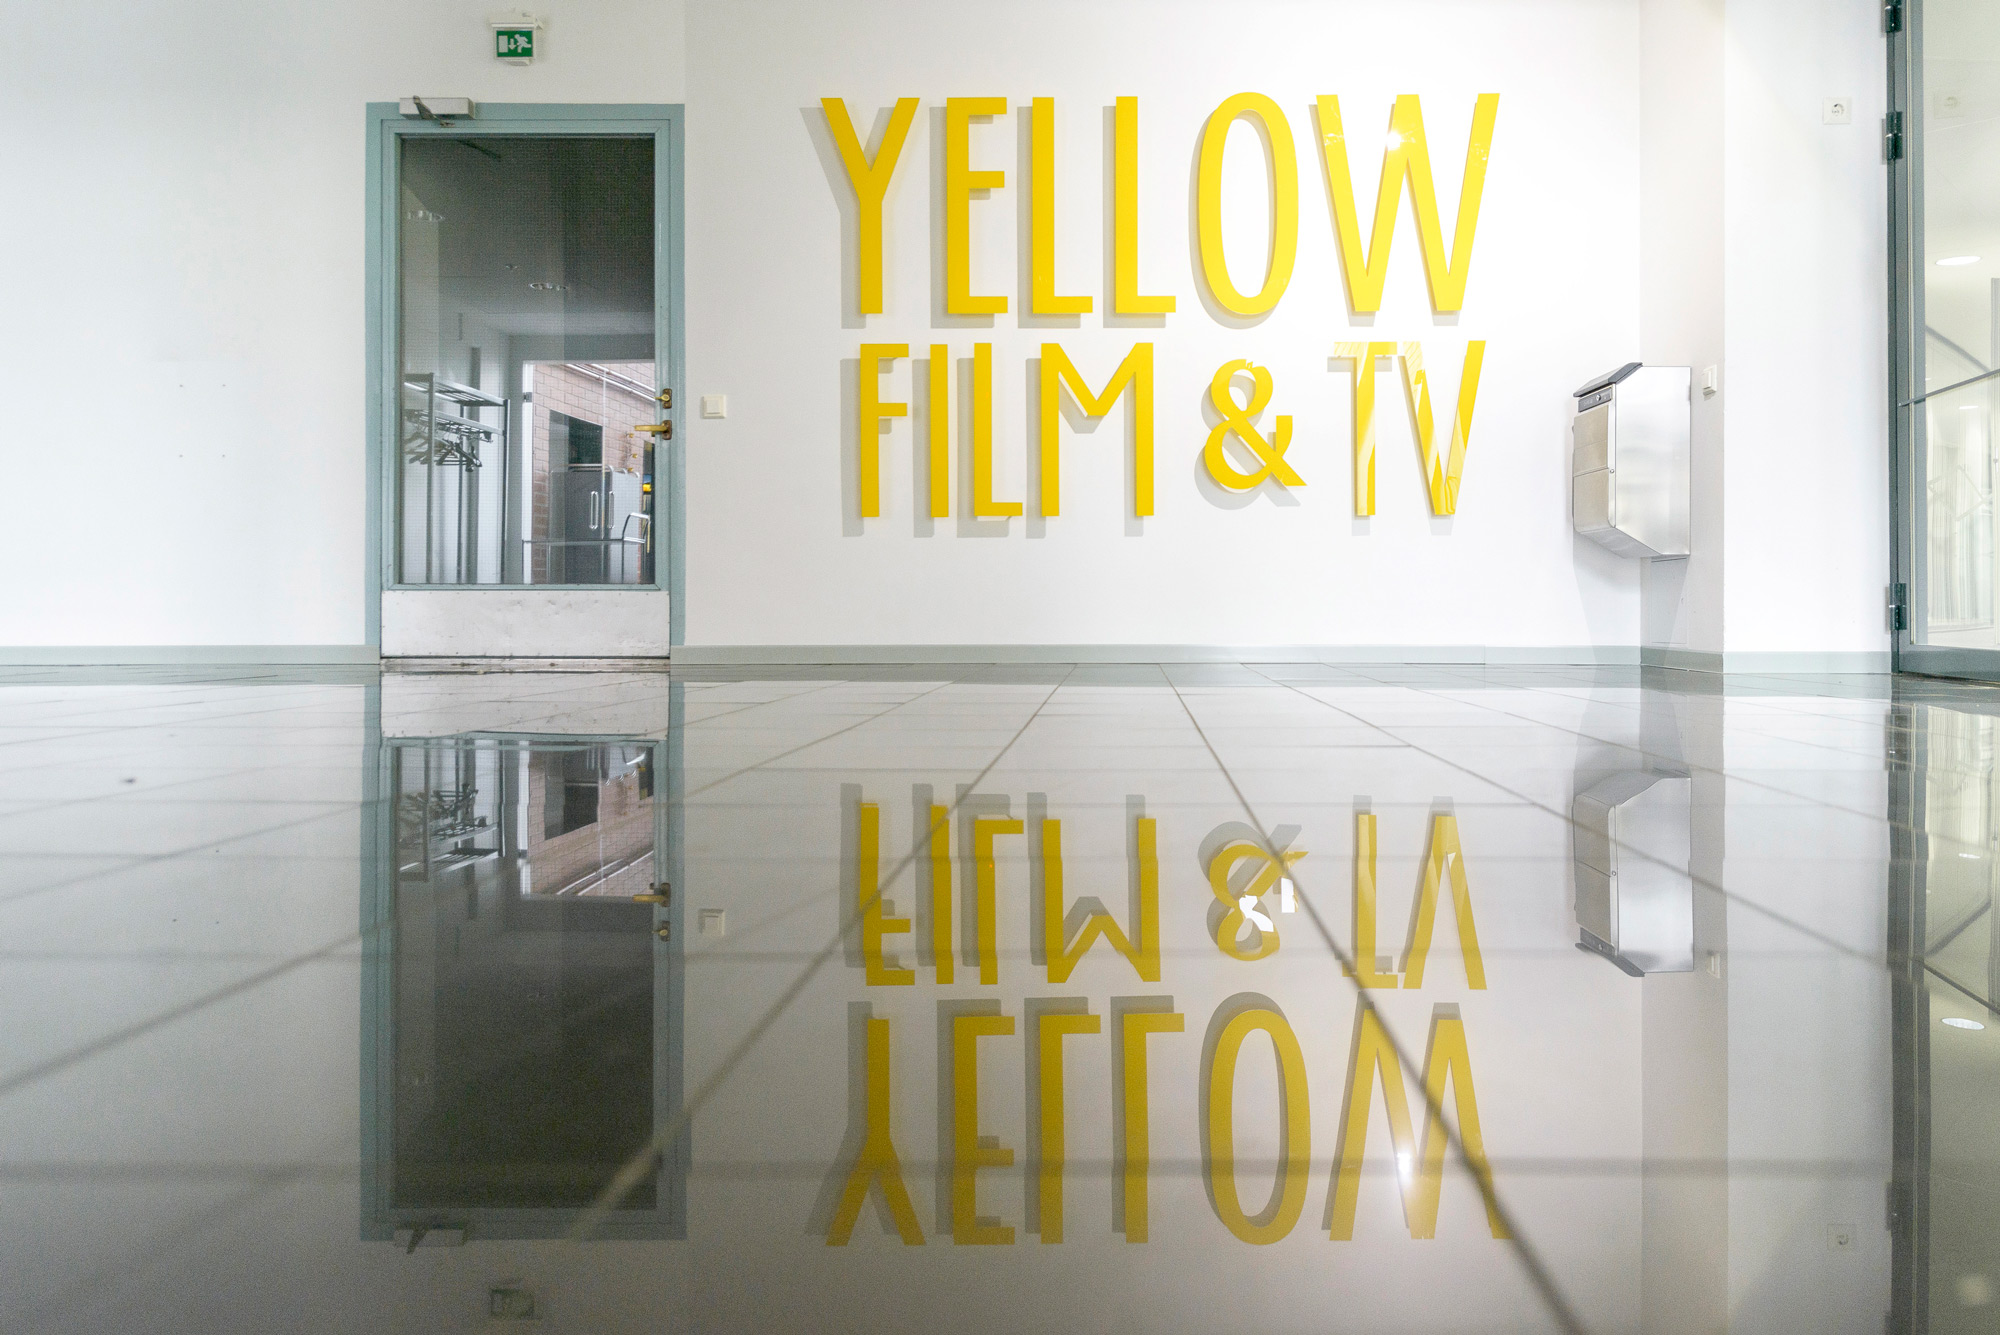 Yellow Film & TV sign